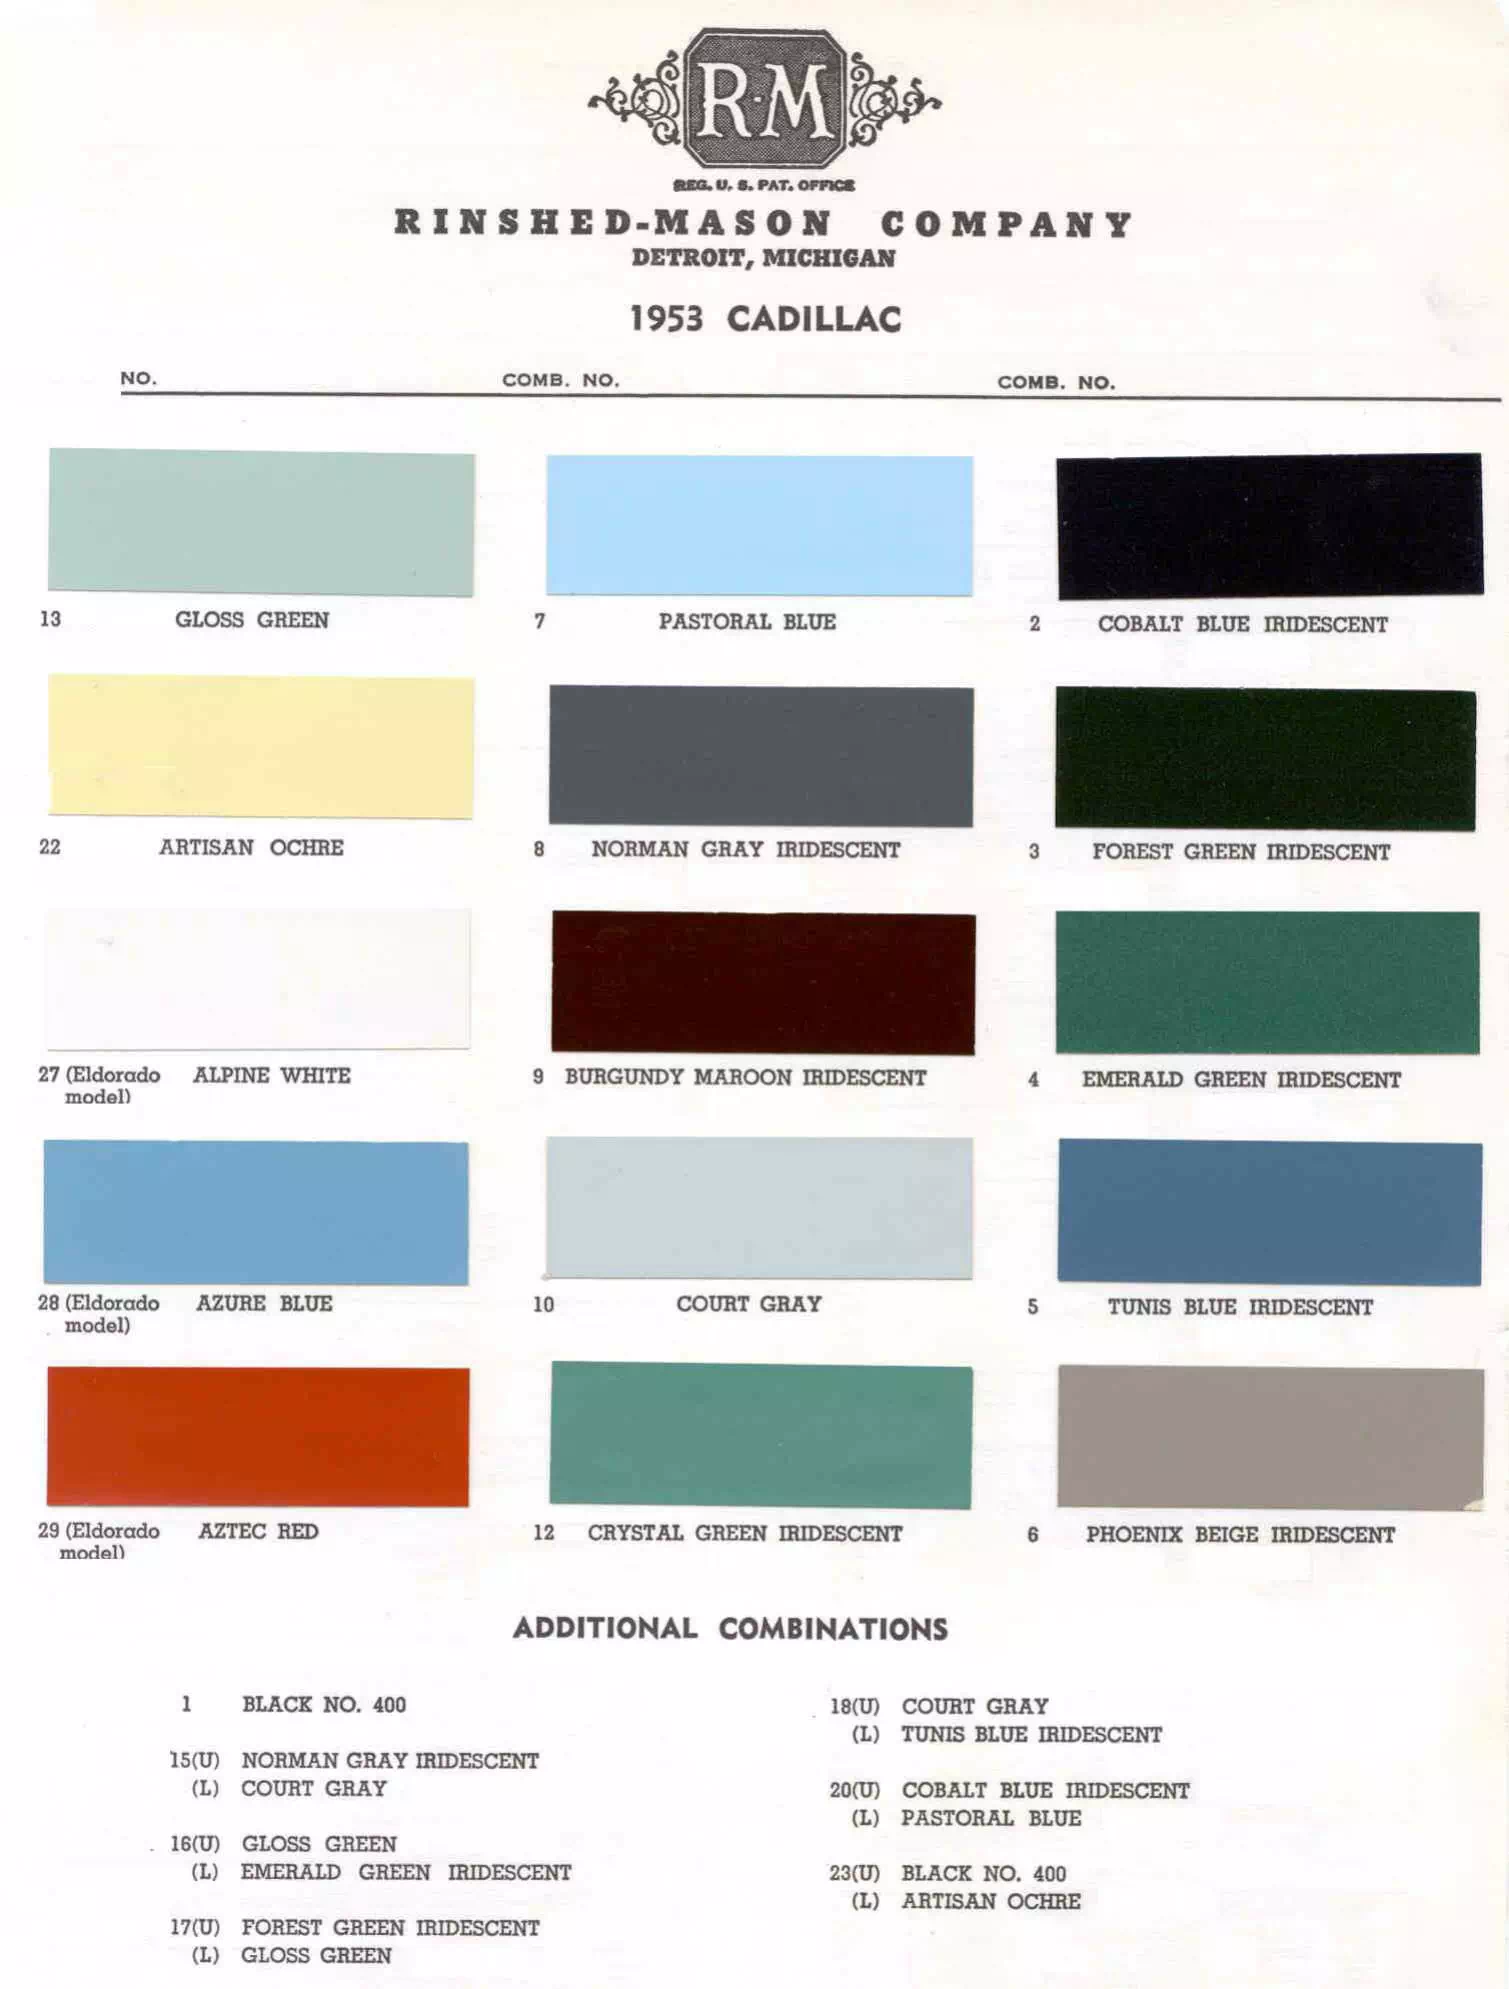 Summary of 1953 Cadillac Paint Codes on all Cadillac's